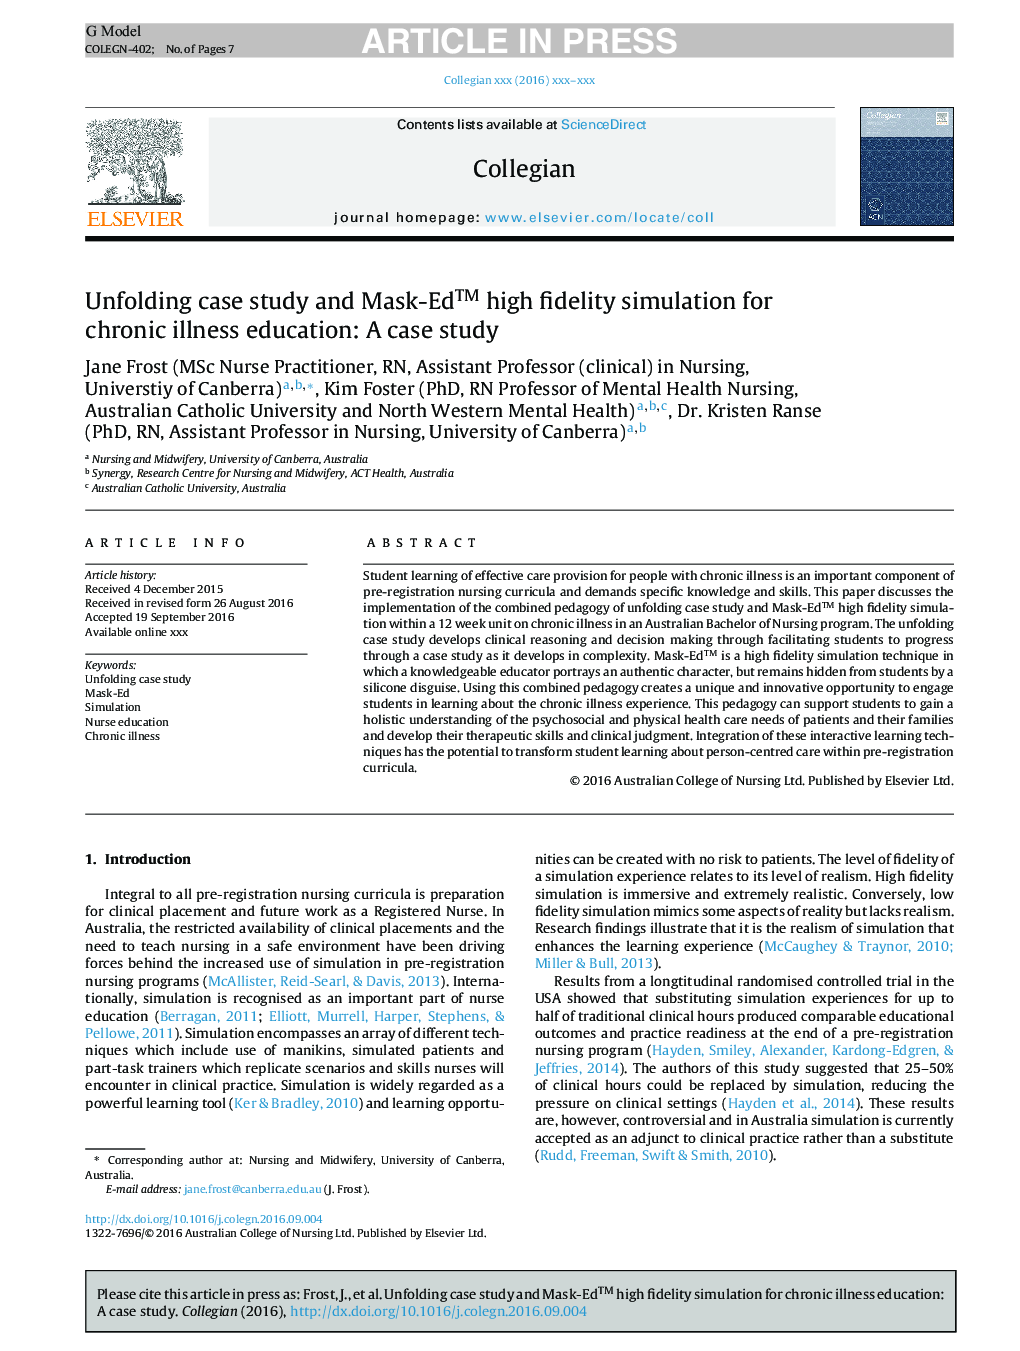 Unfolding case study and Mask-Edâ¢ high fidelity simulation for chronic illness education: A case study